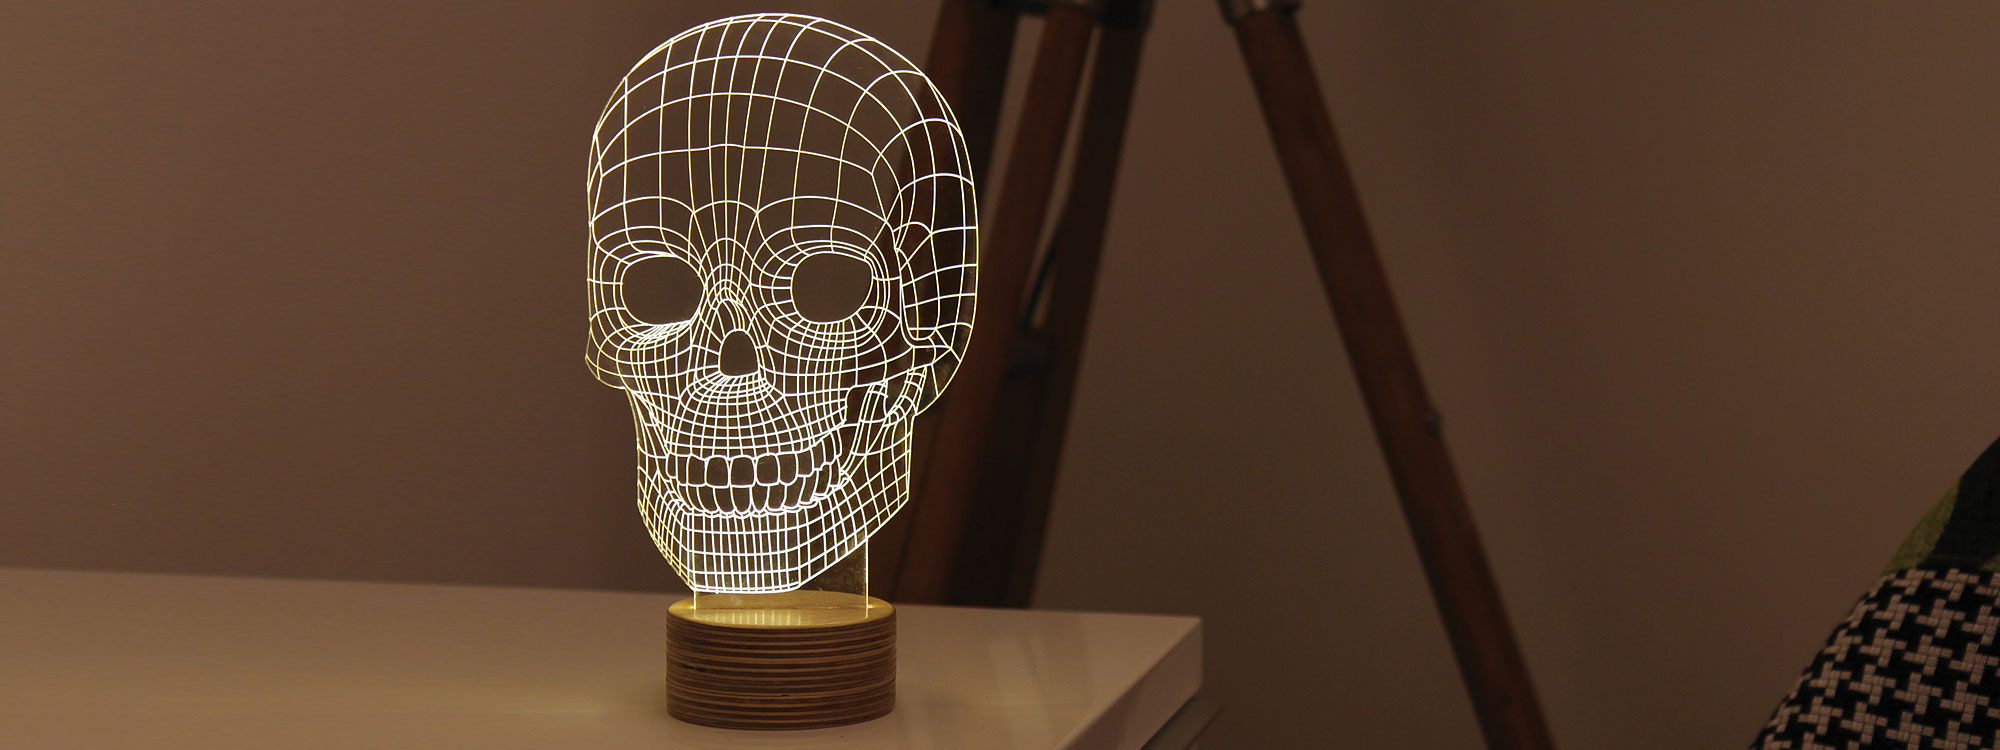 Image of Skull 3 dimenionsal illuminated Skull sculpture by Studio Cheha